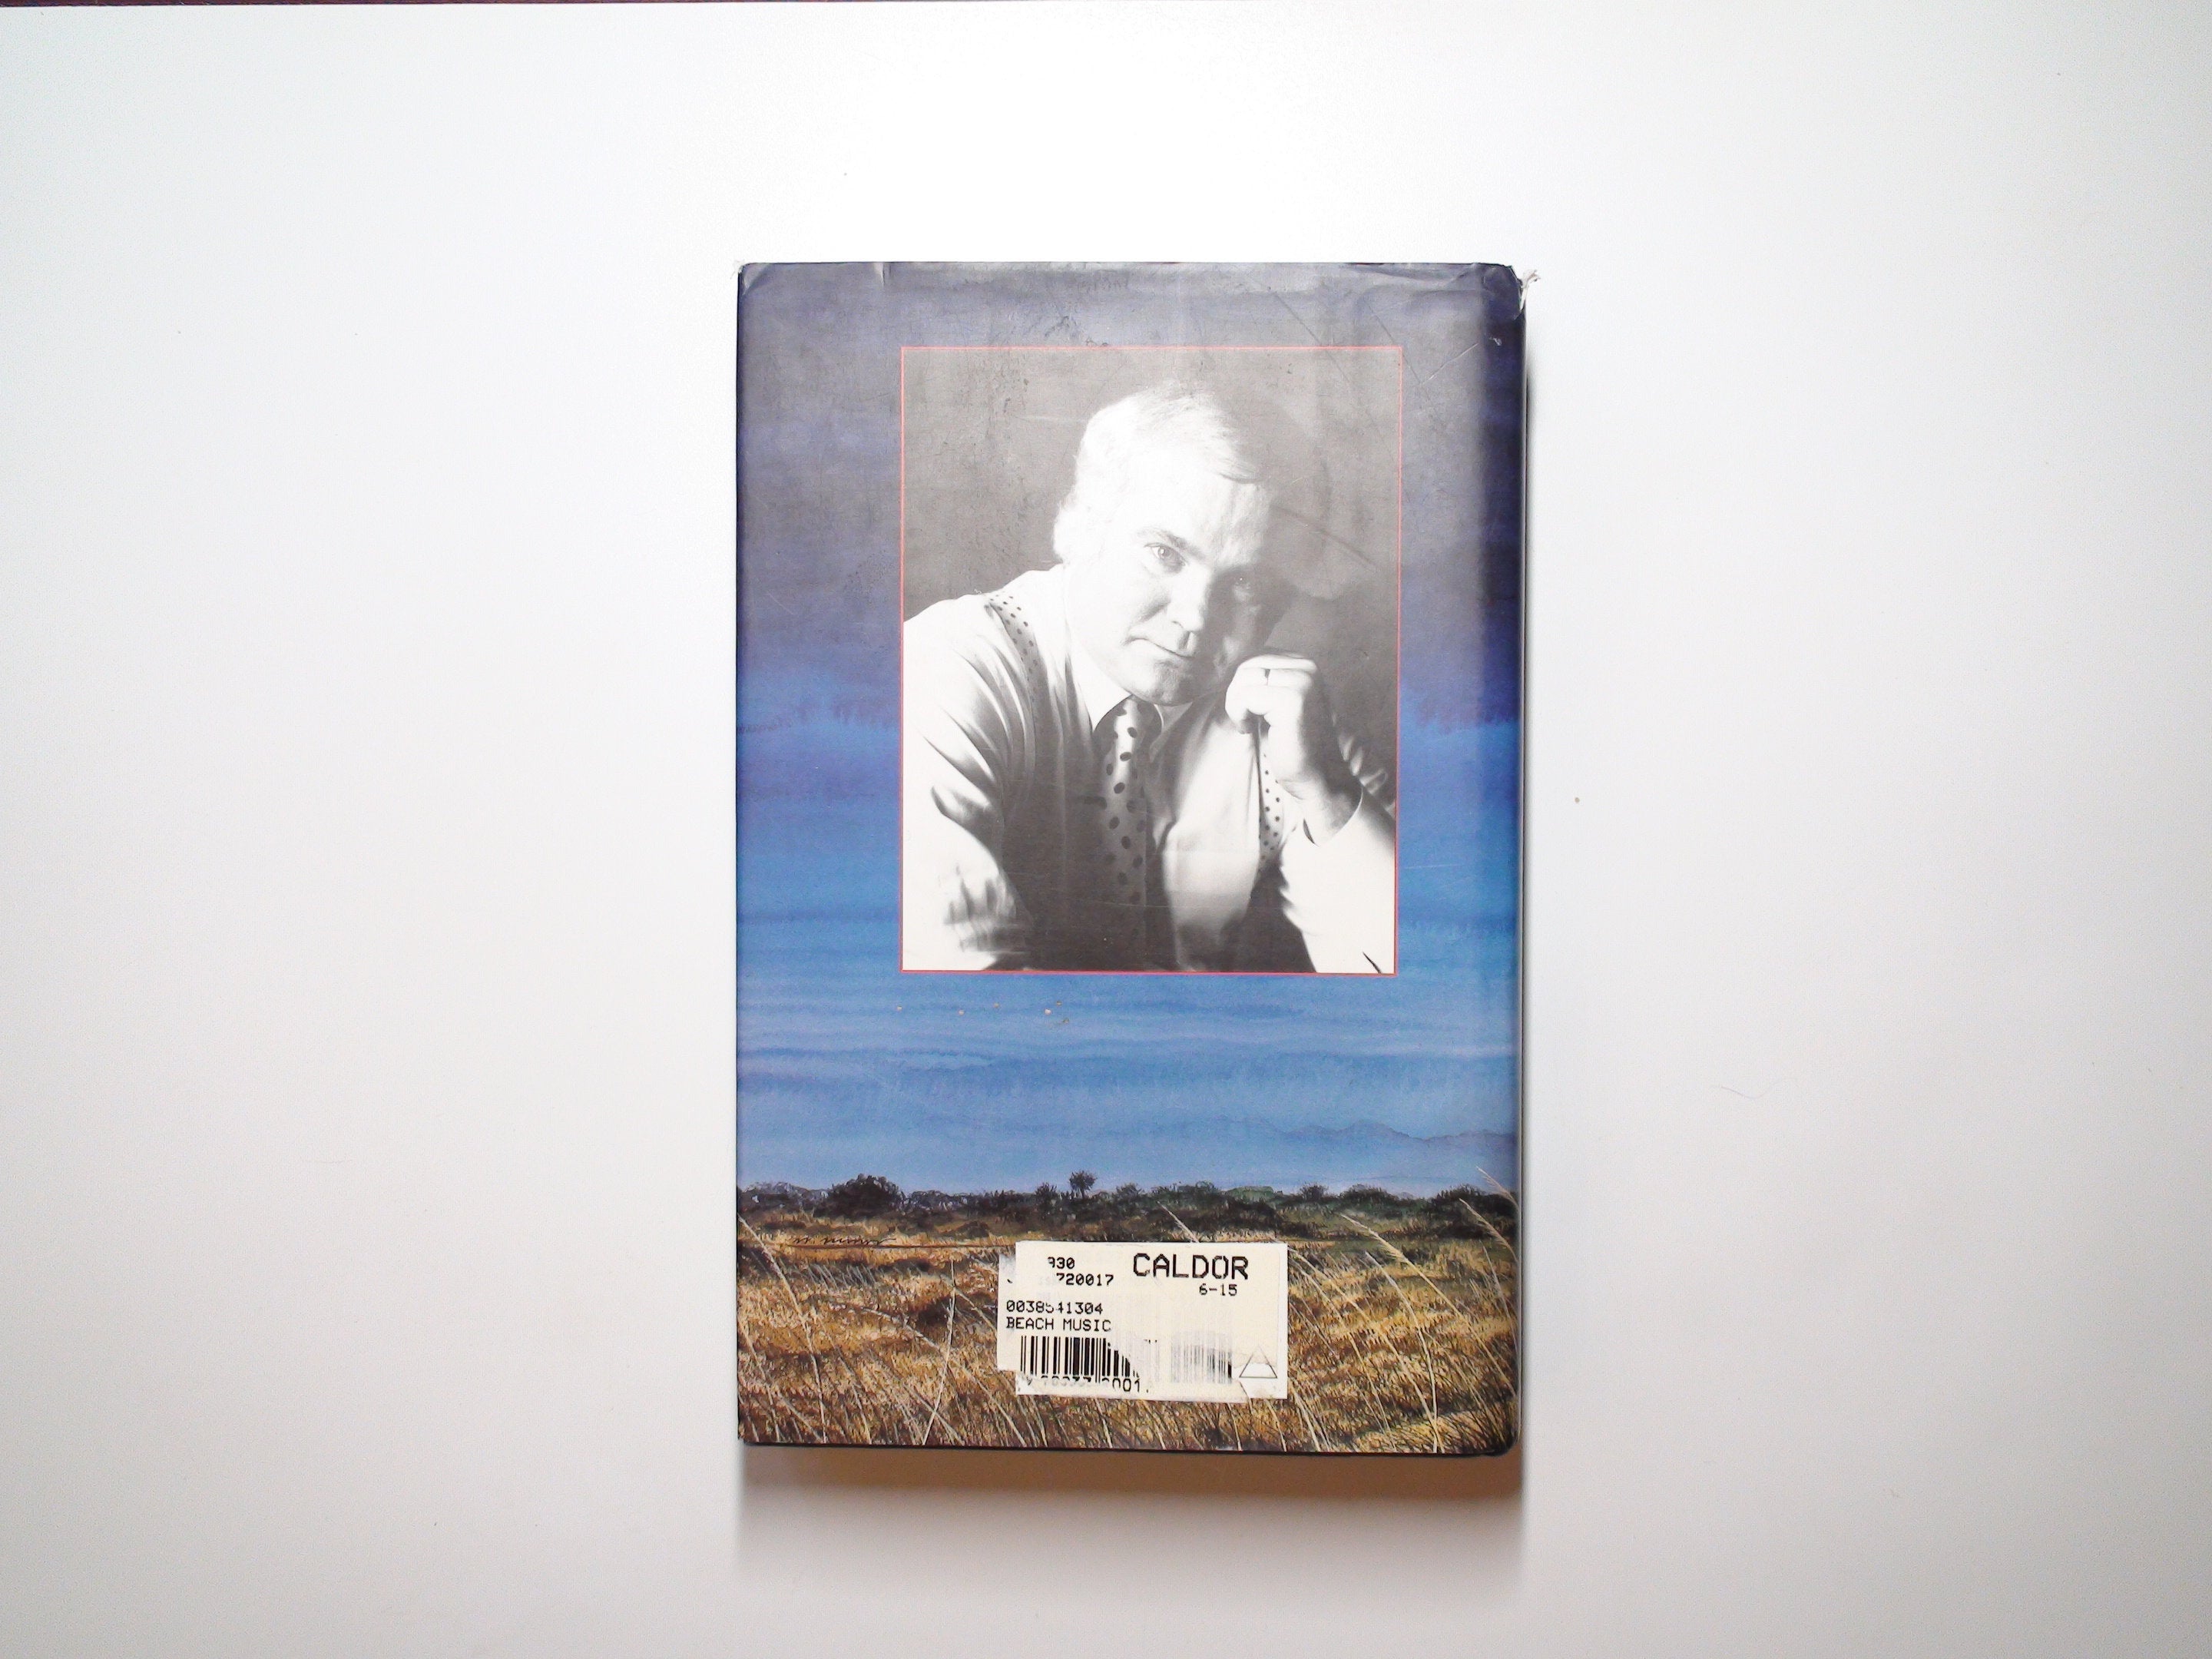 Beach Music, by Pat Conroy, 1st Ed, 1st Printing, Hardcover w DJ, June 1995